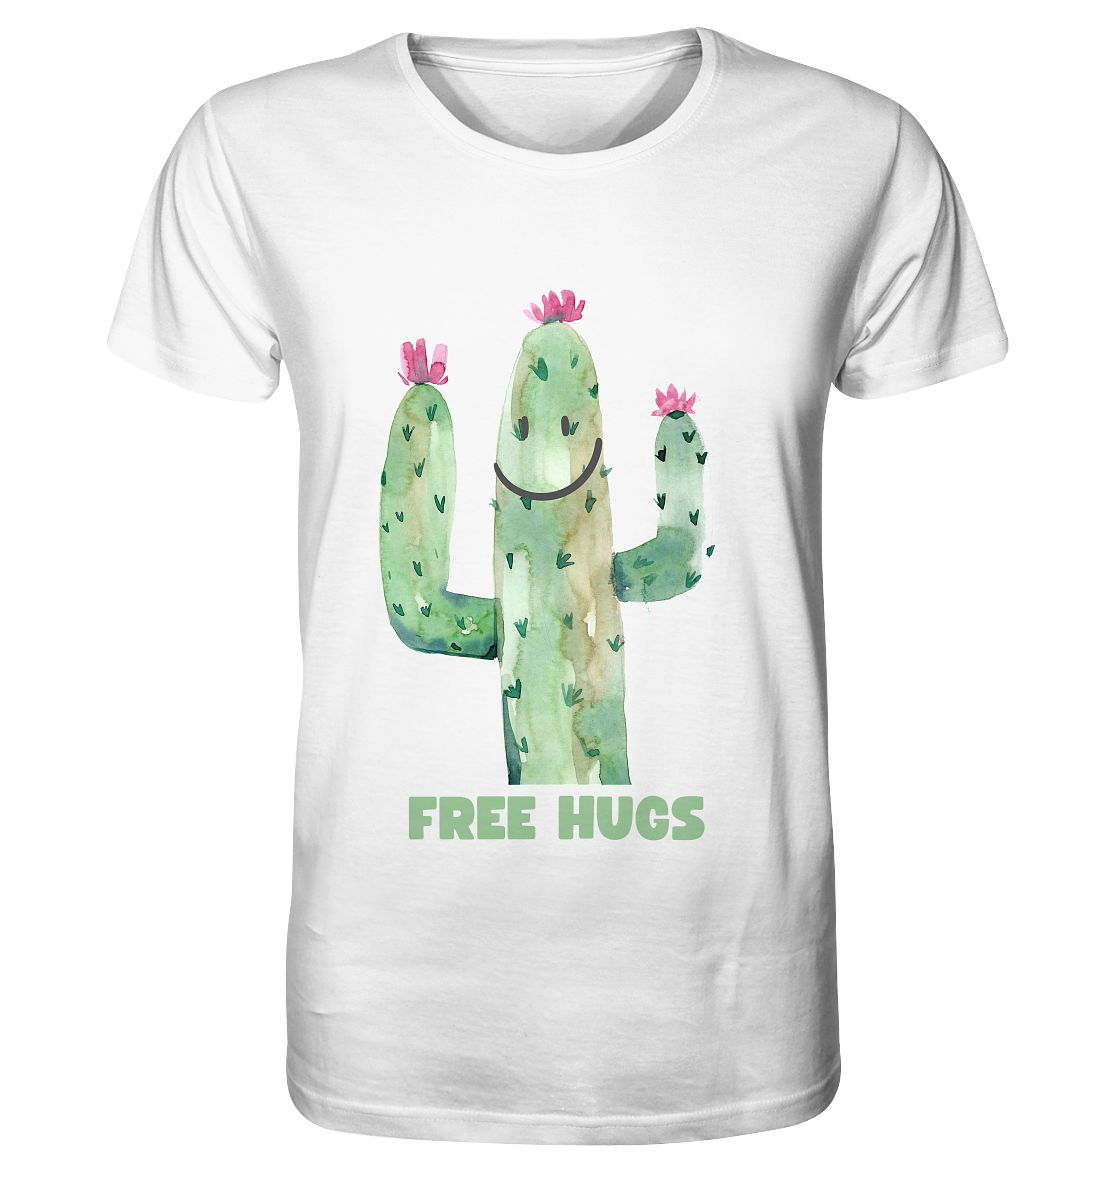 Free Hugs | Premium organic men's t-shirt